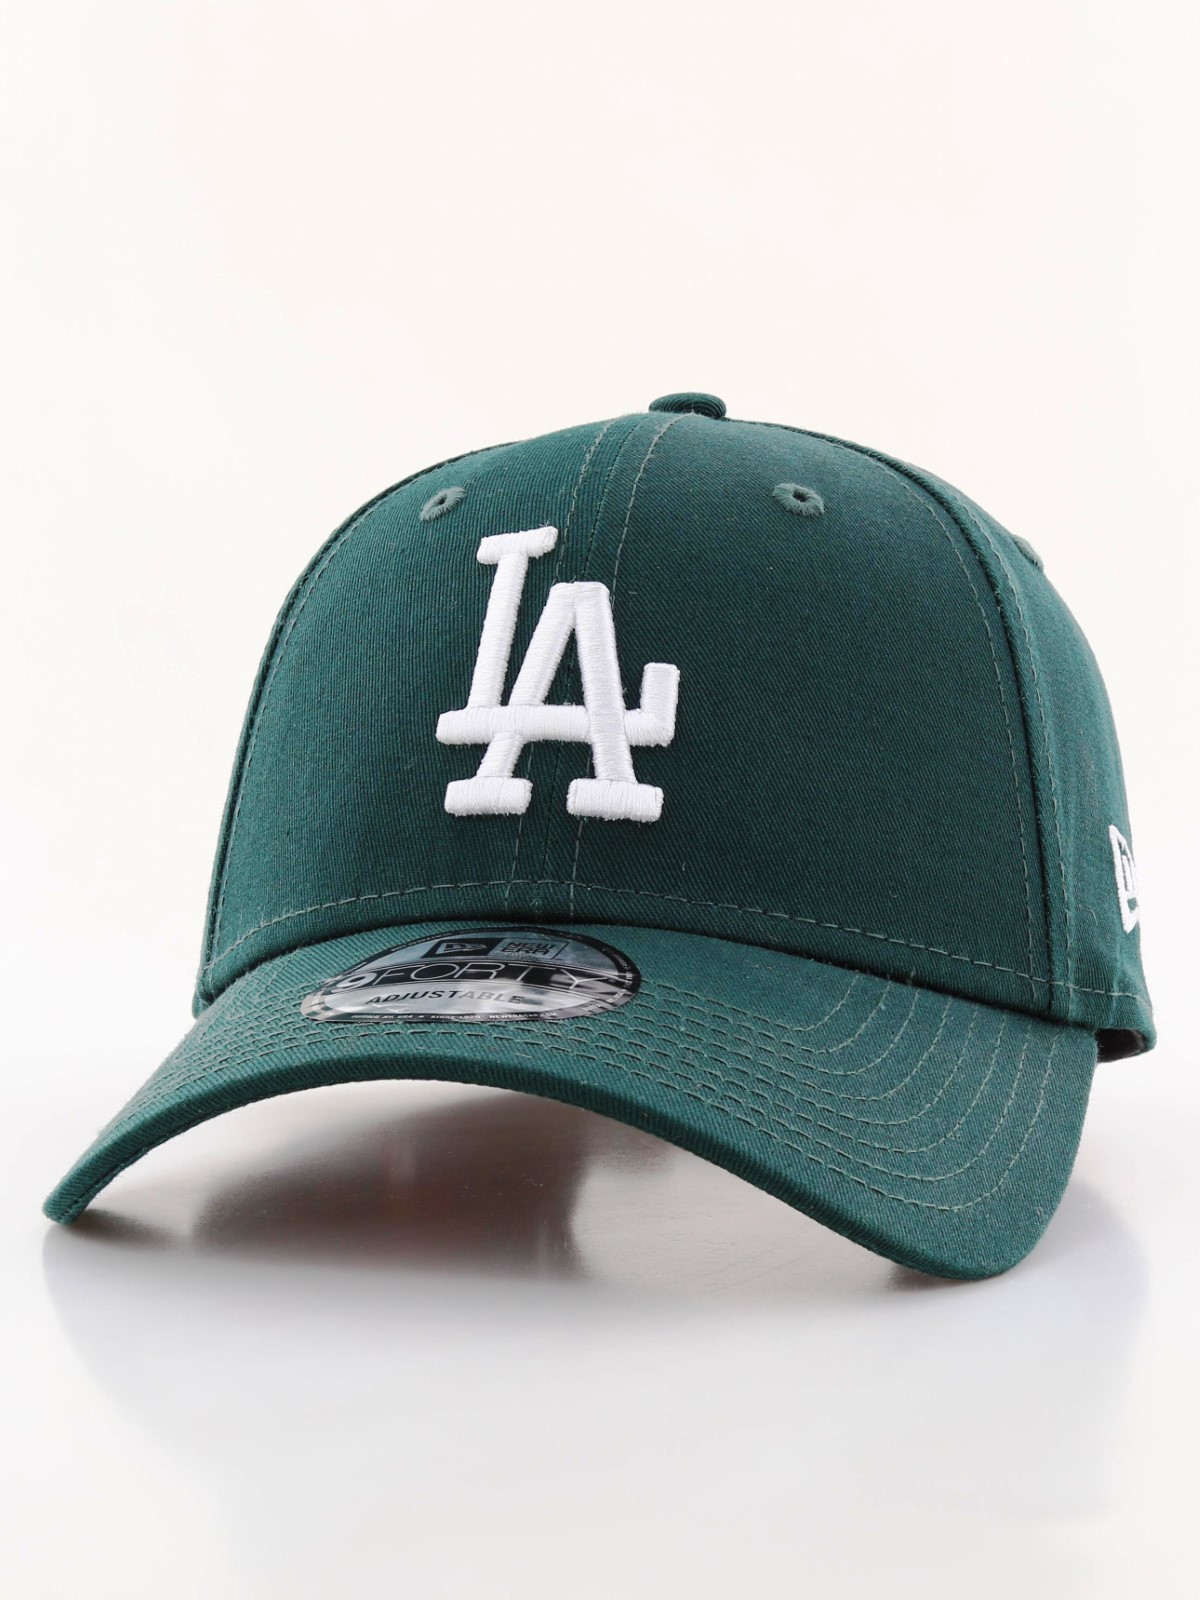 New Era League Essential Los Angeles Dodgers Cap Dark Green/White